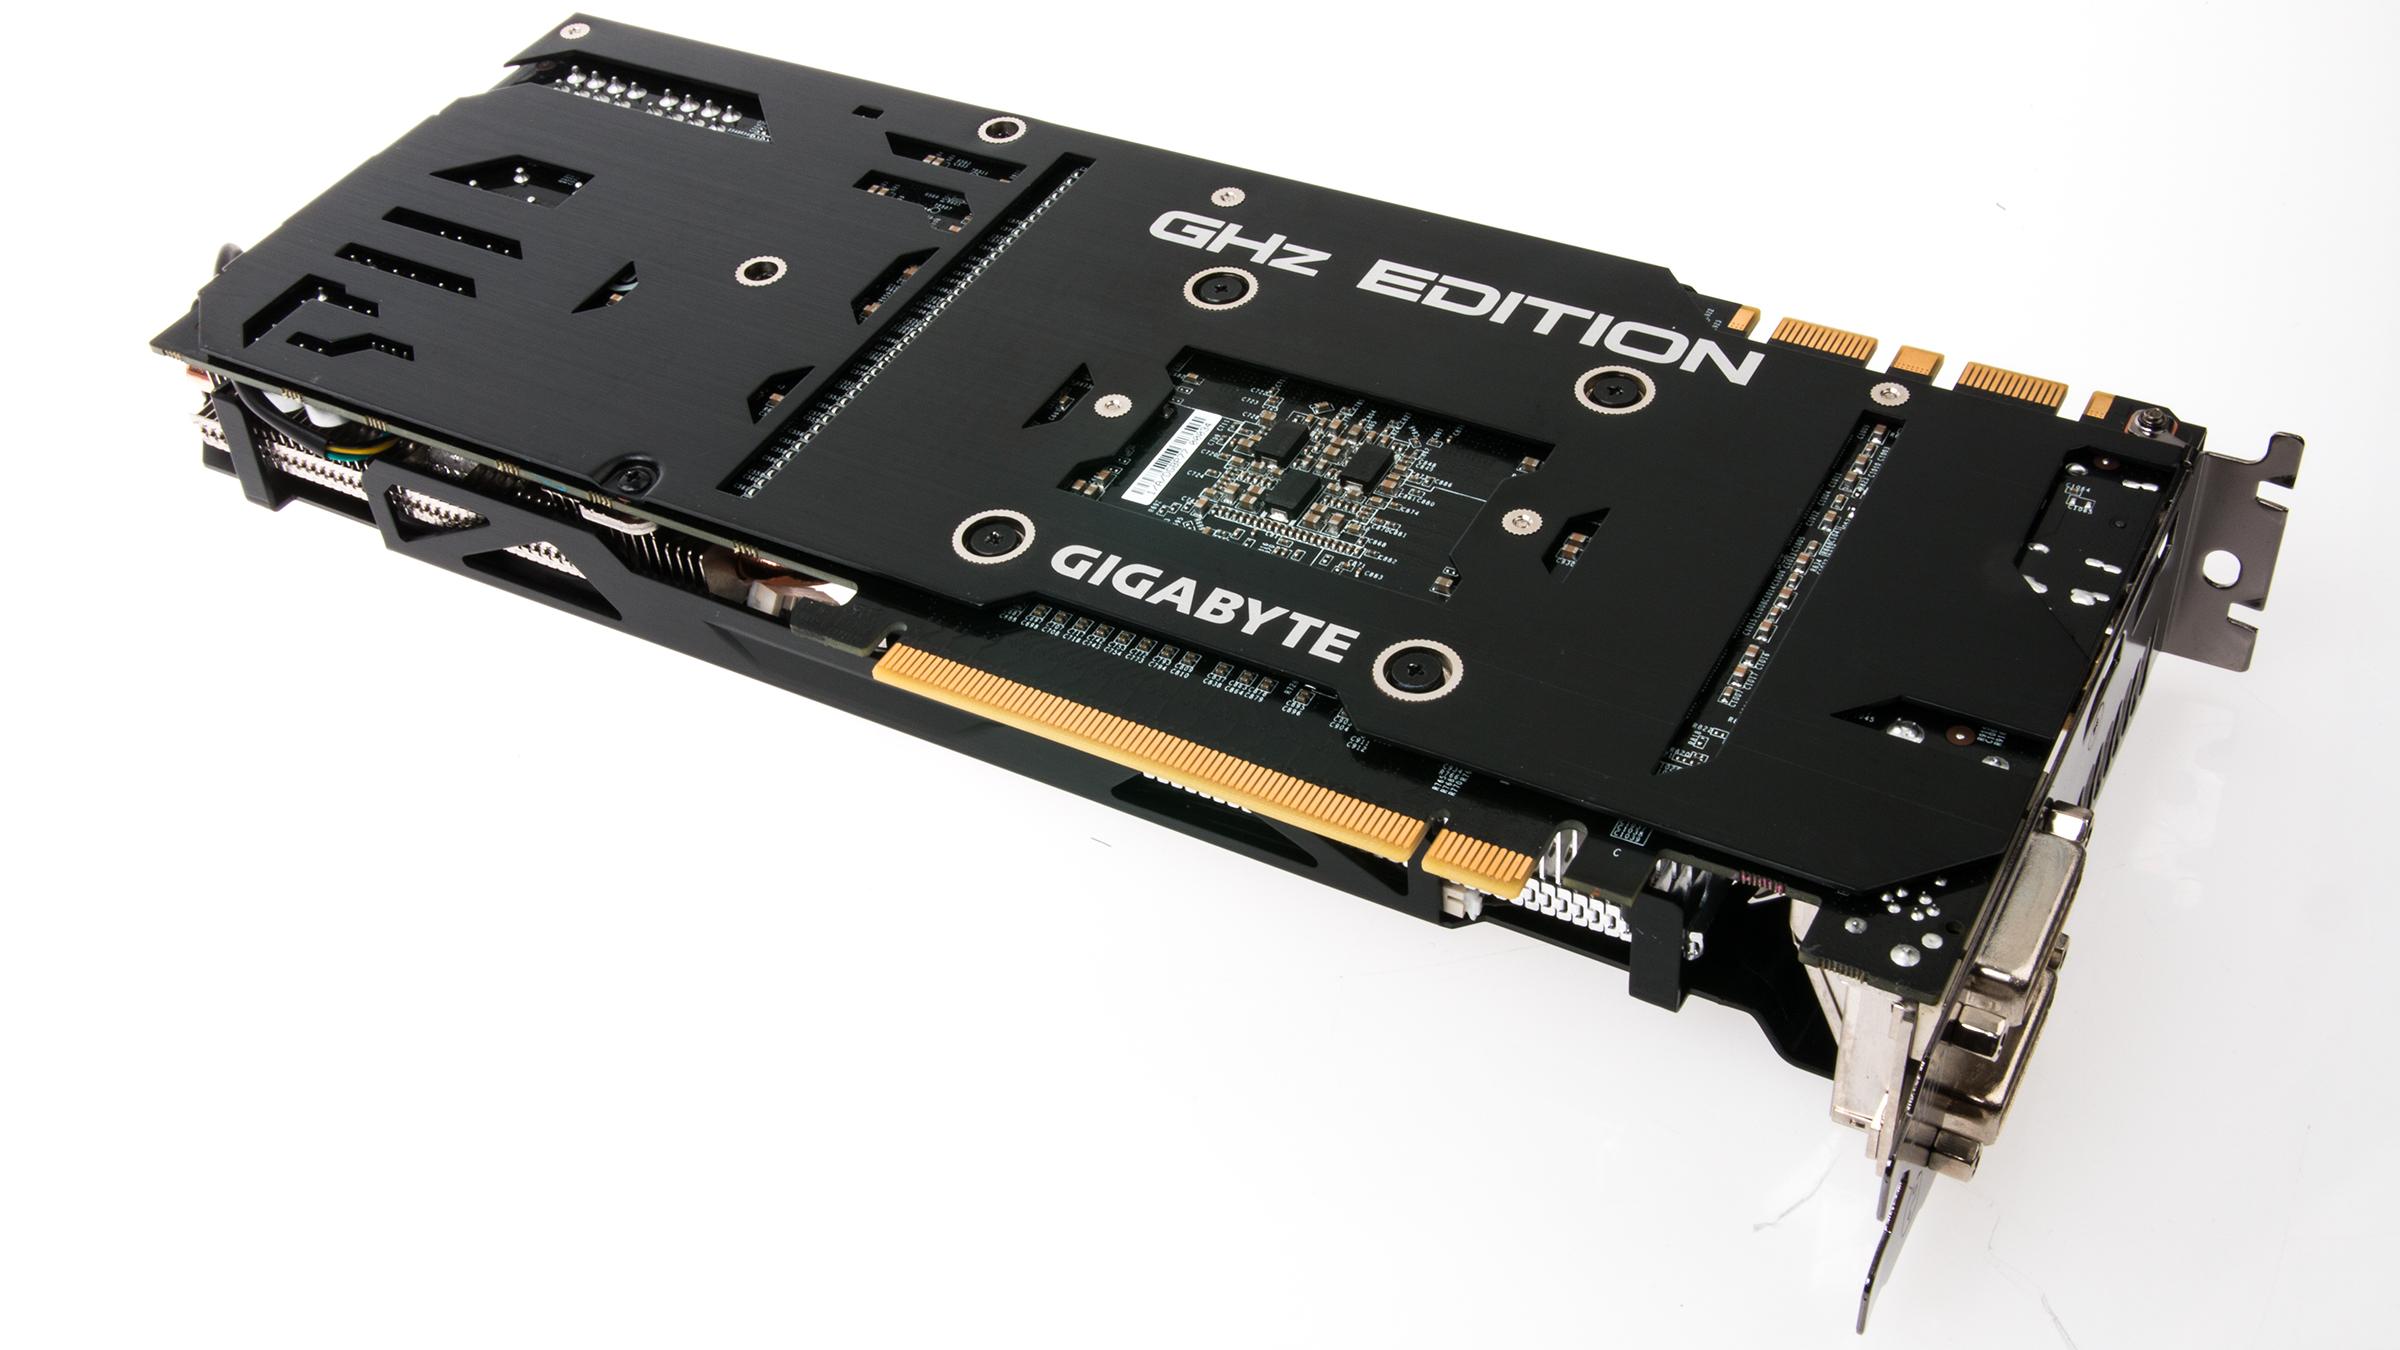 Gigabyte GeForce GTX 780 Ti GHz Edition har samme bakplatedesign som lillebroren.Foto: Varg Aamo, Hardware.no